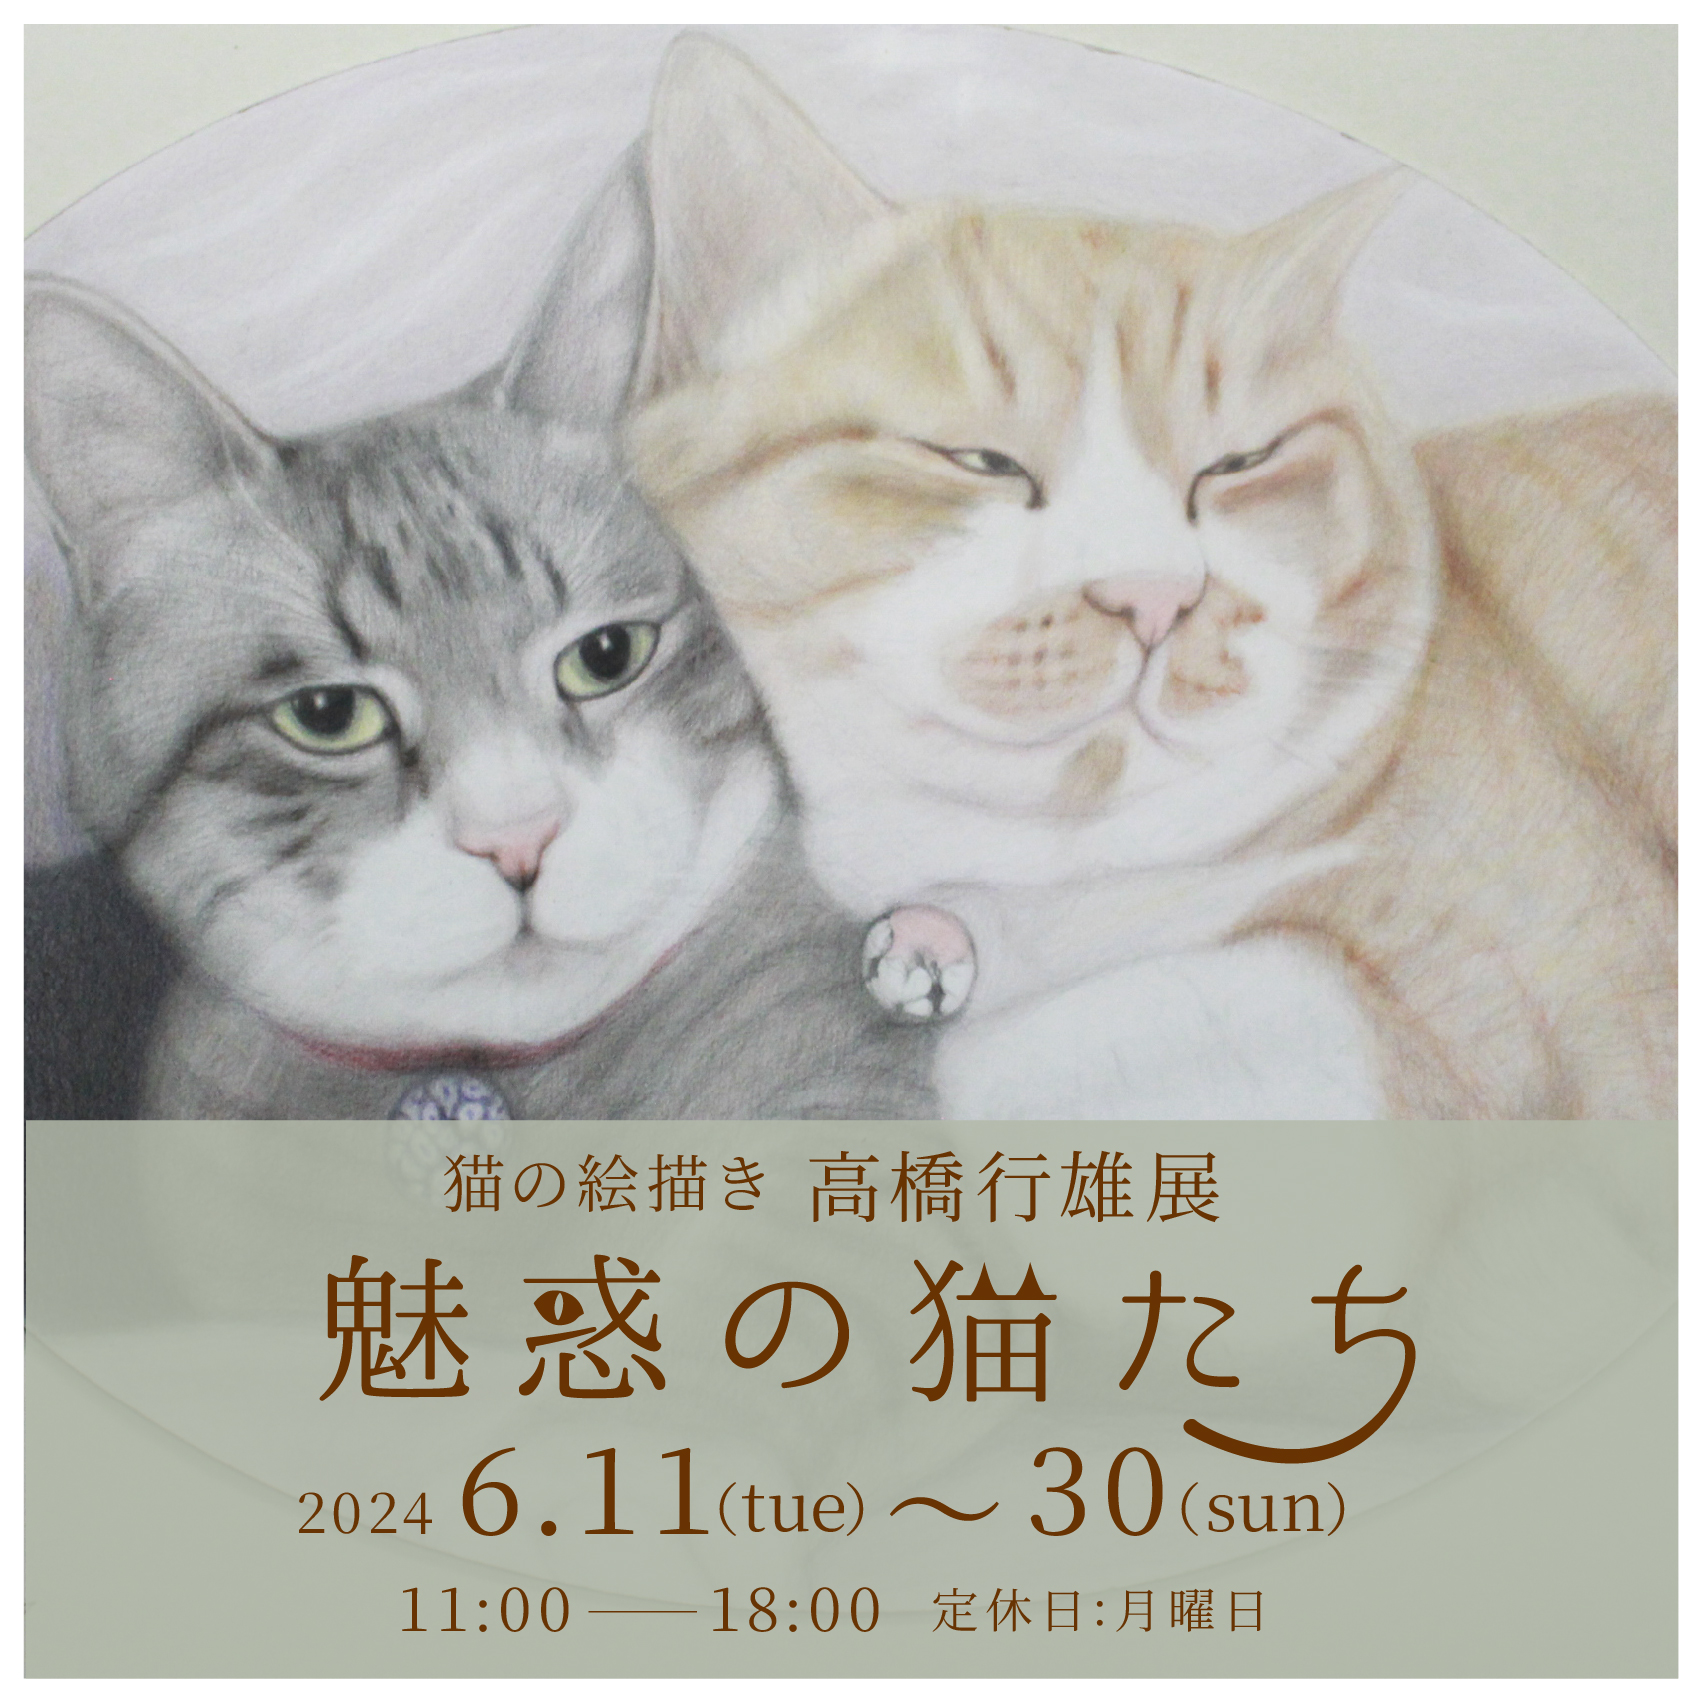 FROM KYOTO GALLERYにて、高橋行雄展「魅惑の猫たち」開催いたします。 | ArkCorporation